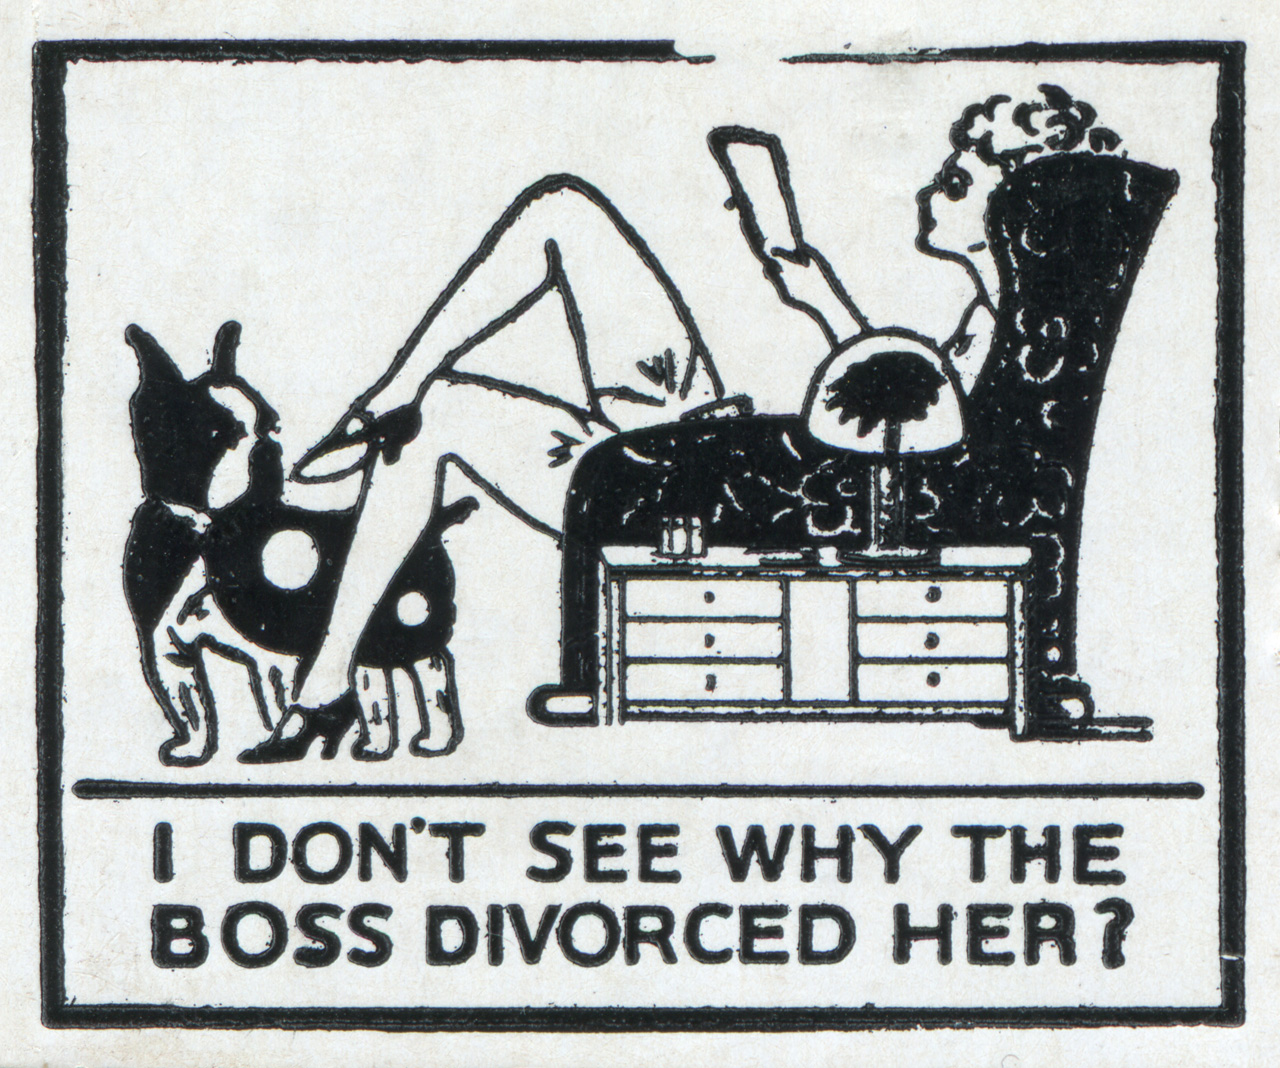 her_boss_divorced_her.jpg